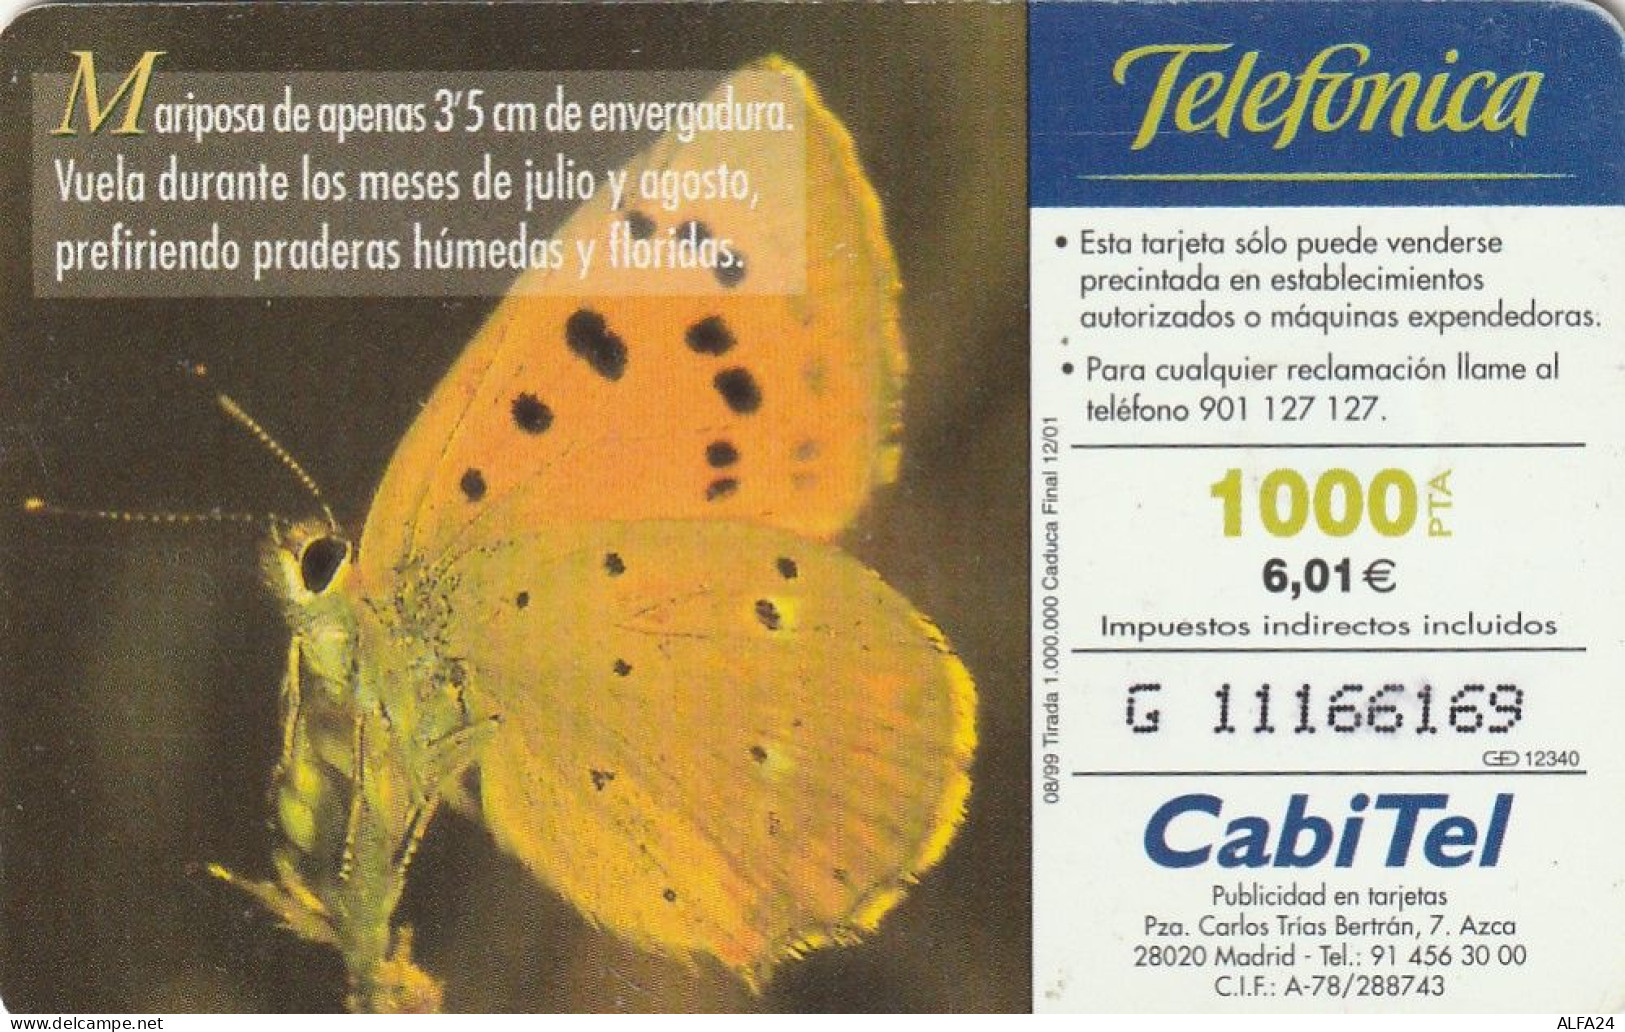 PHONE CARD SPAGNA FAUNA IBERICA  (CV6954 - Basisausgaben